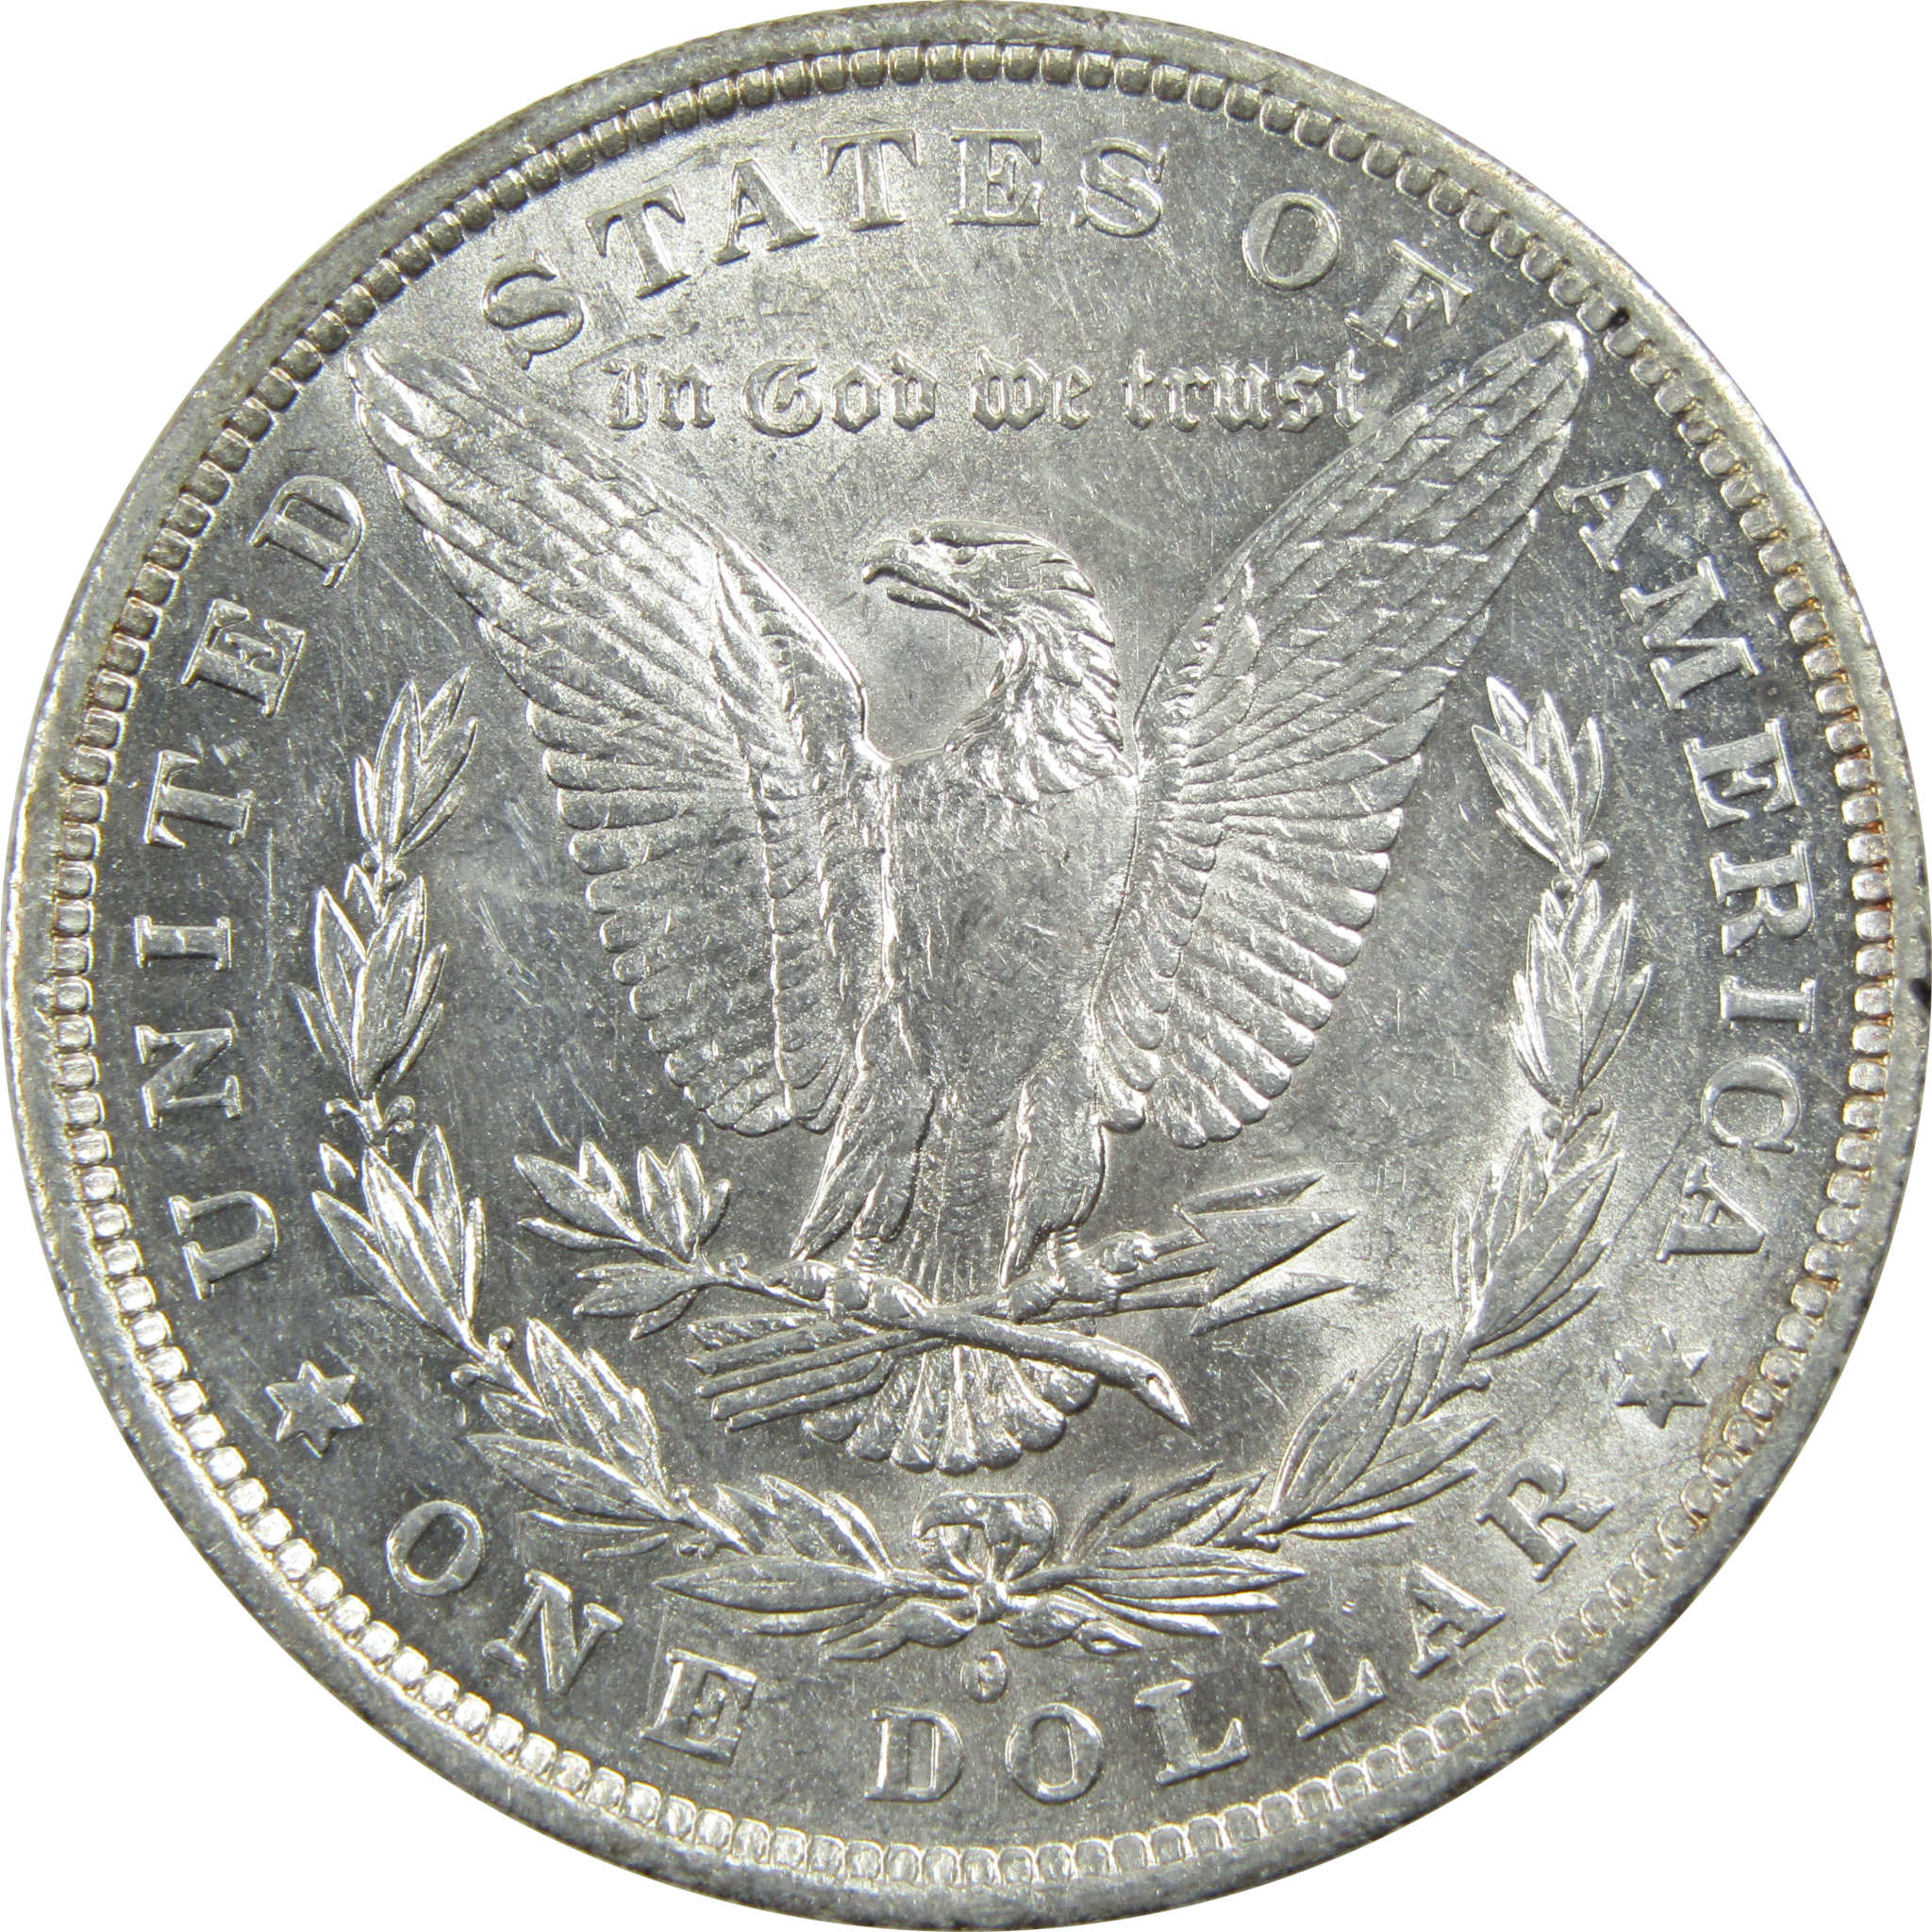 1882 O/S Morgan Dollar AU About Uncirculated Silver $1 Coin SKU:I13608 - Morgan coin - Morgan silver dollar - Morgan silver dollar for sale - Profile Coins &amp; Collectibles